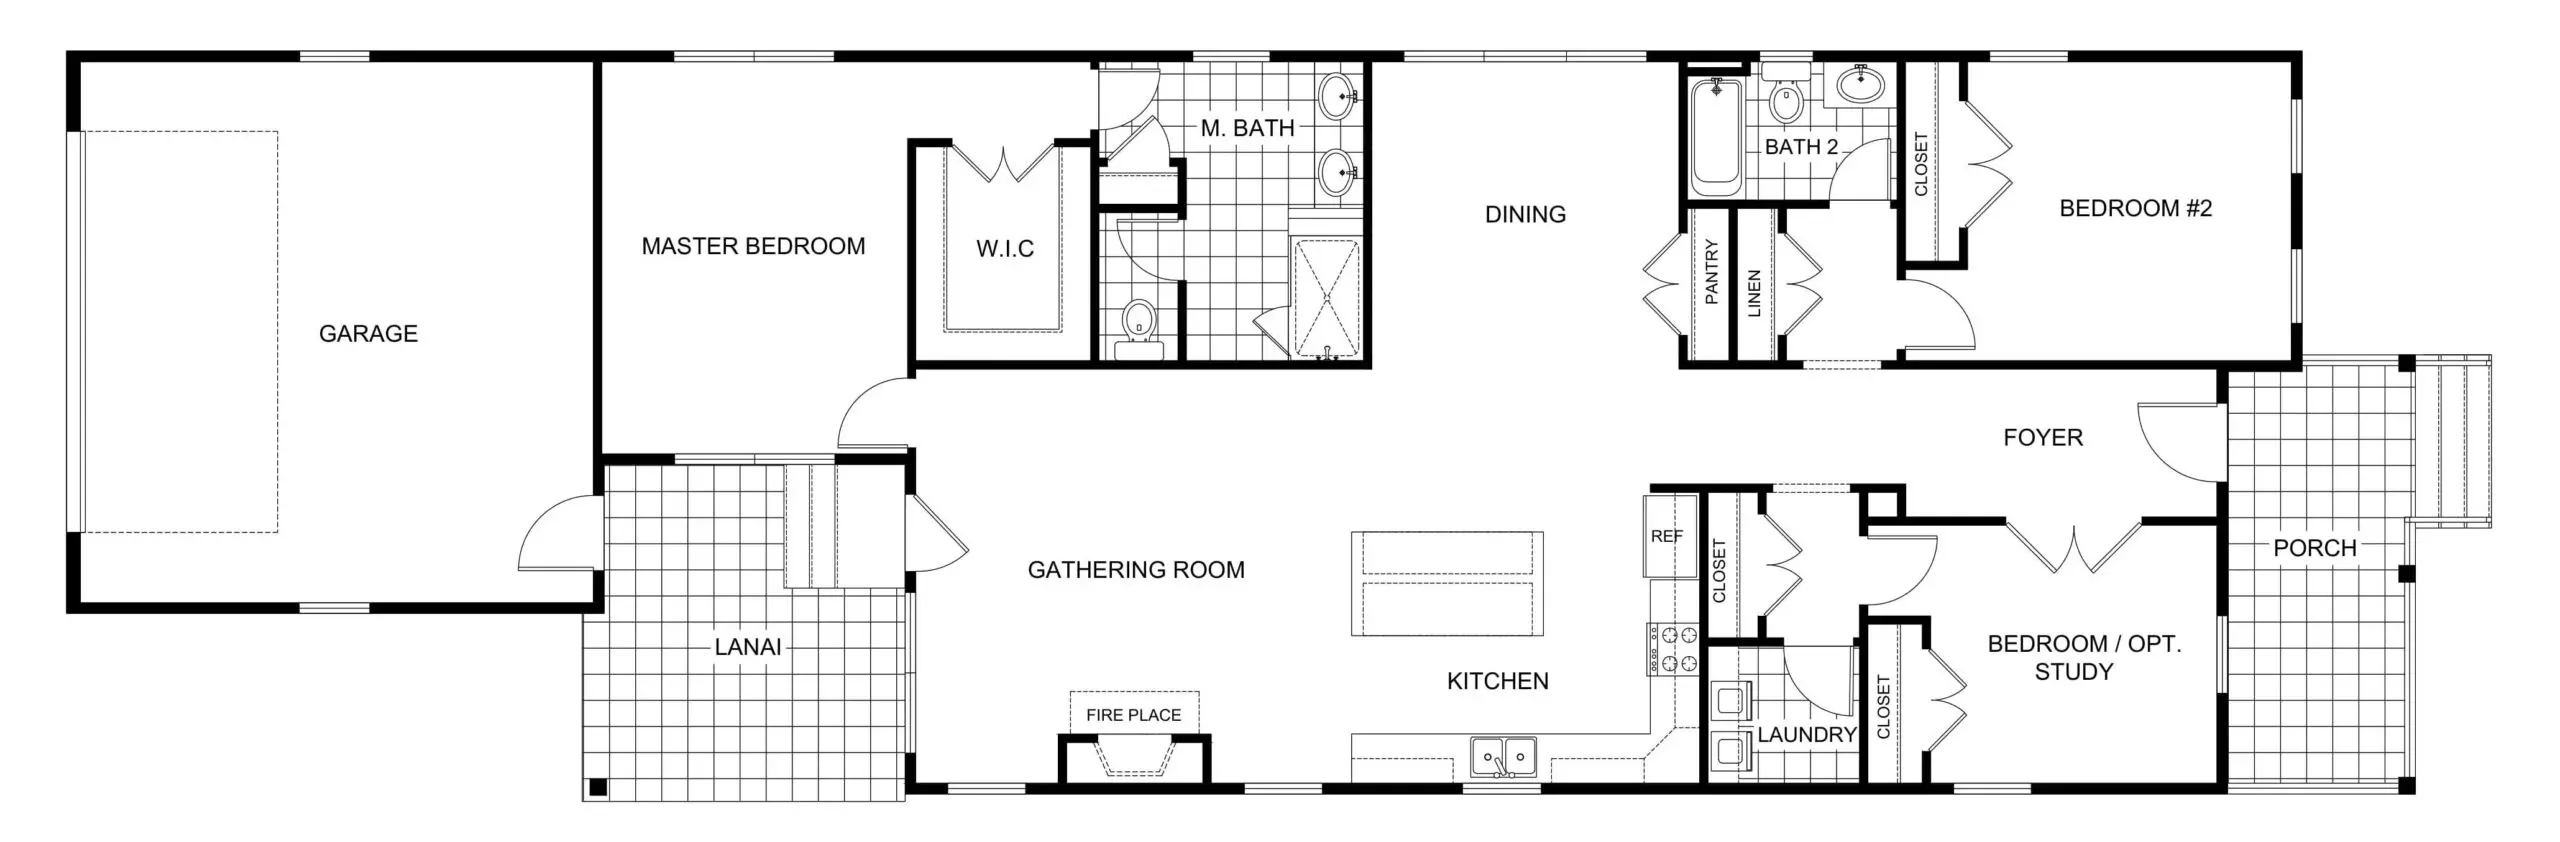 Royalty-Free photo: House floor plan blueprint | PickPik